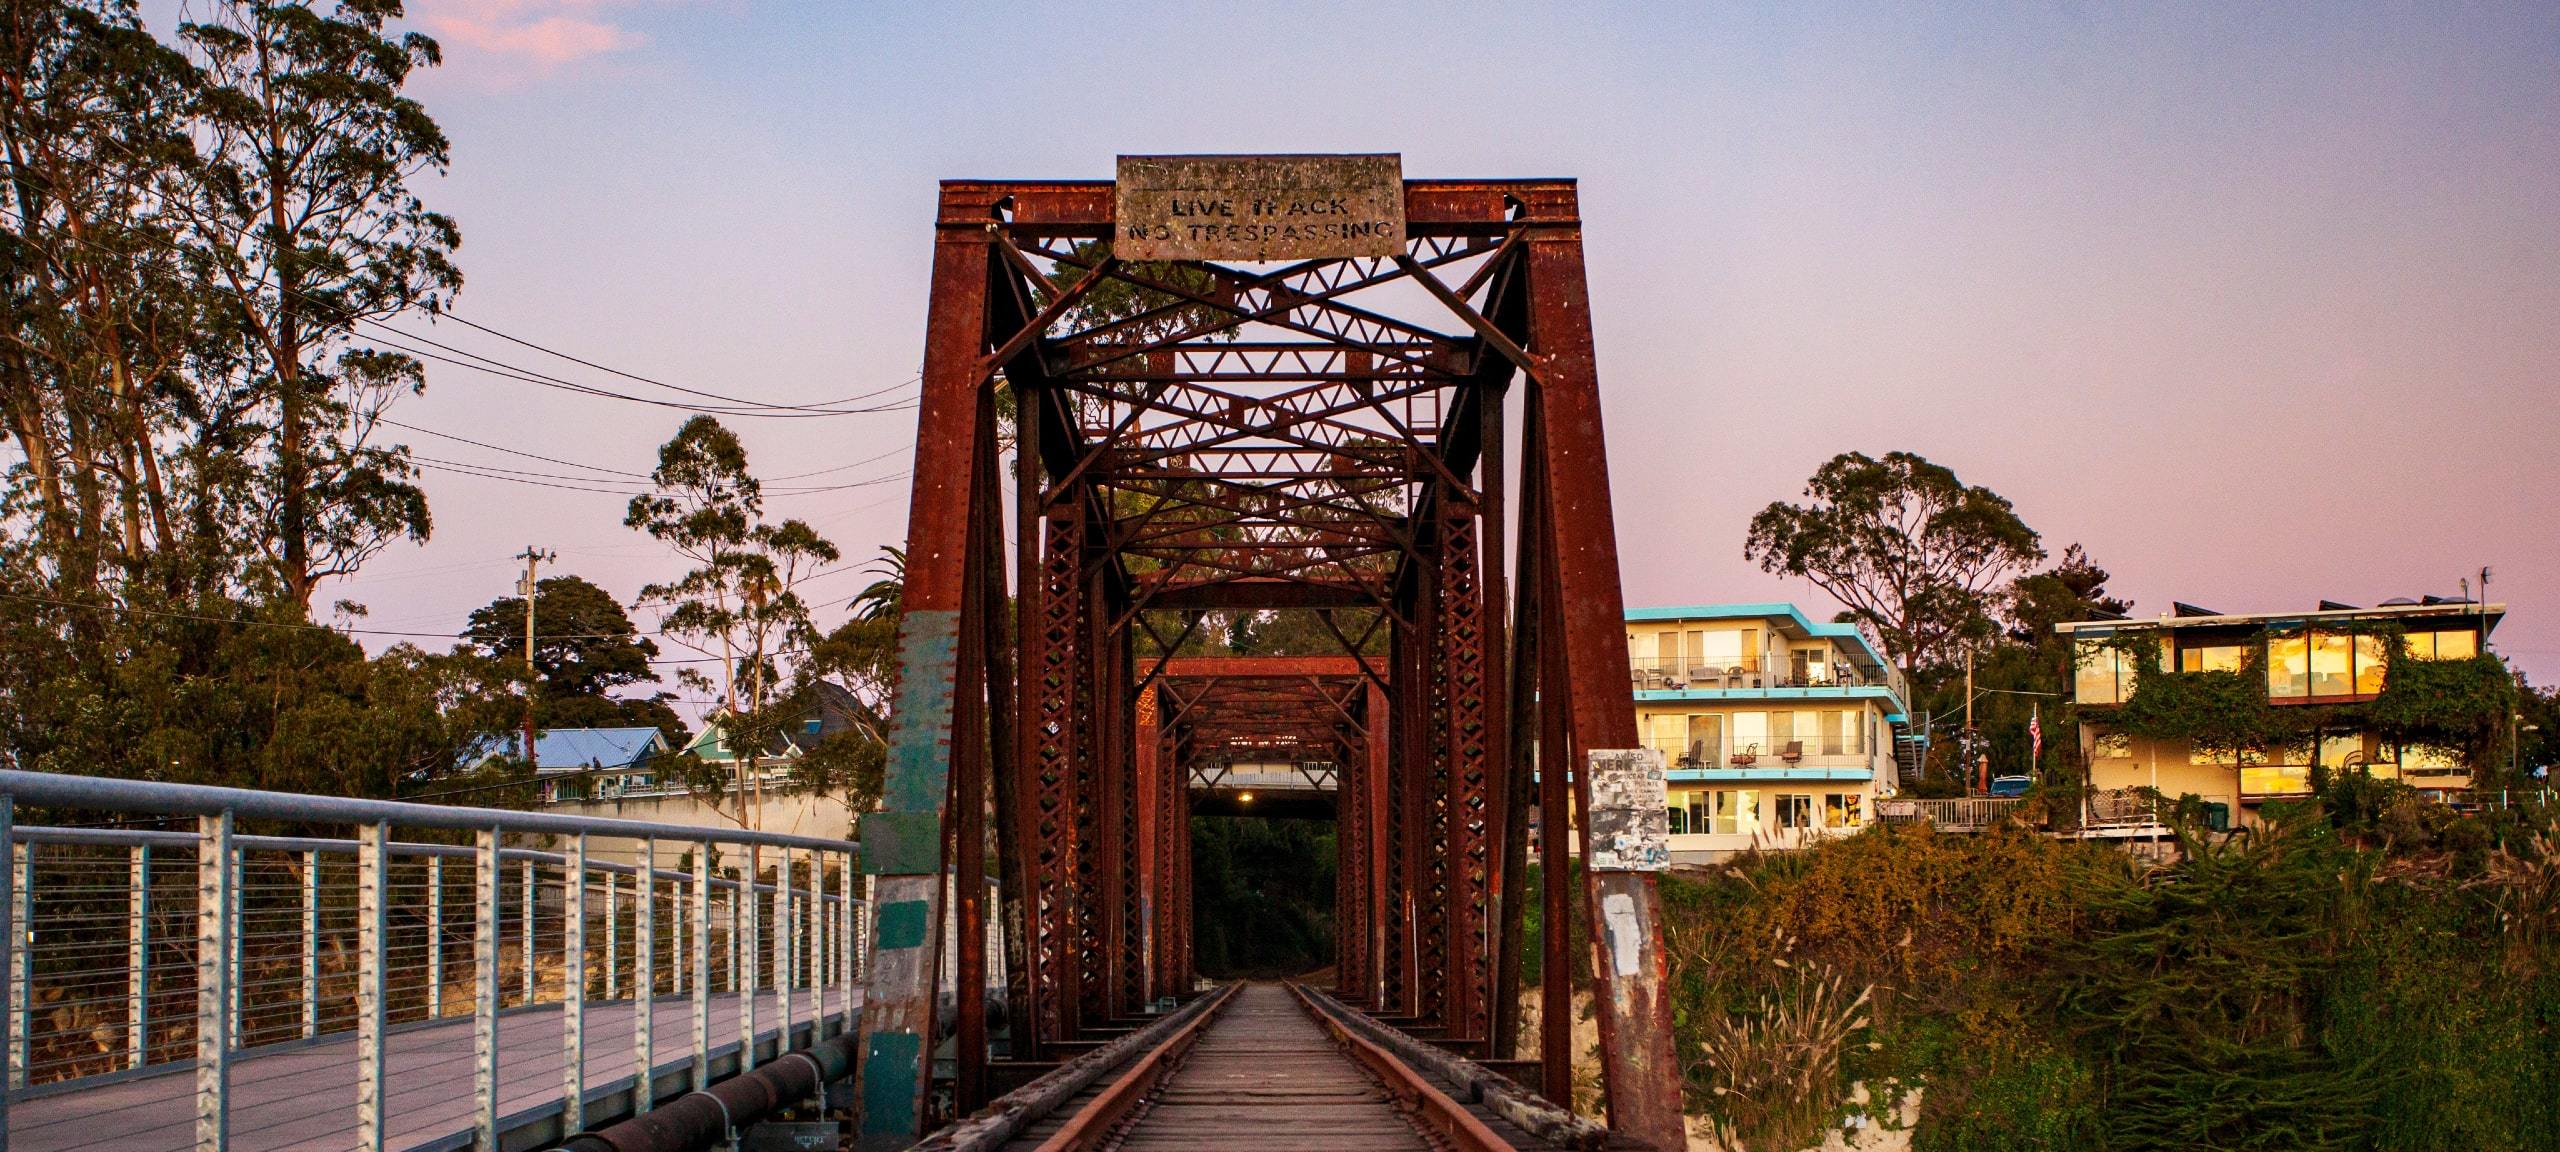 Abandoned bridge during sunset in Santa Cruz, CA with luxury homes on hillside